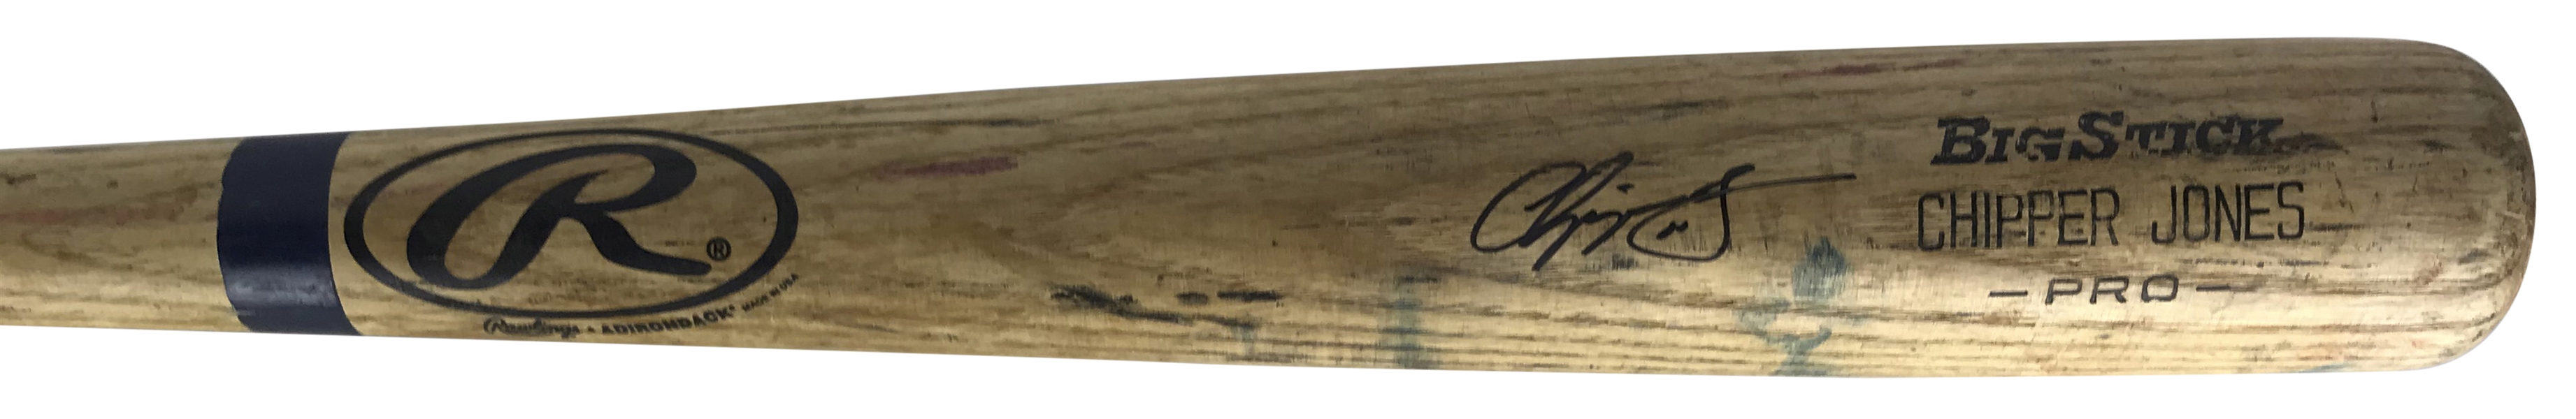 Chipper Jones Signed & Game Used 2008 MS20 Baseball Bat - PSA/DNA GU 10!